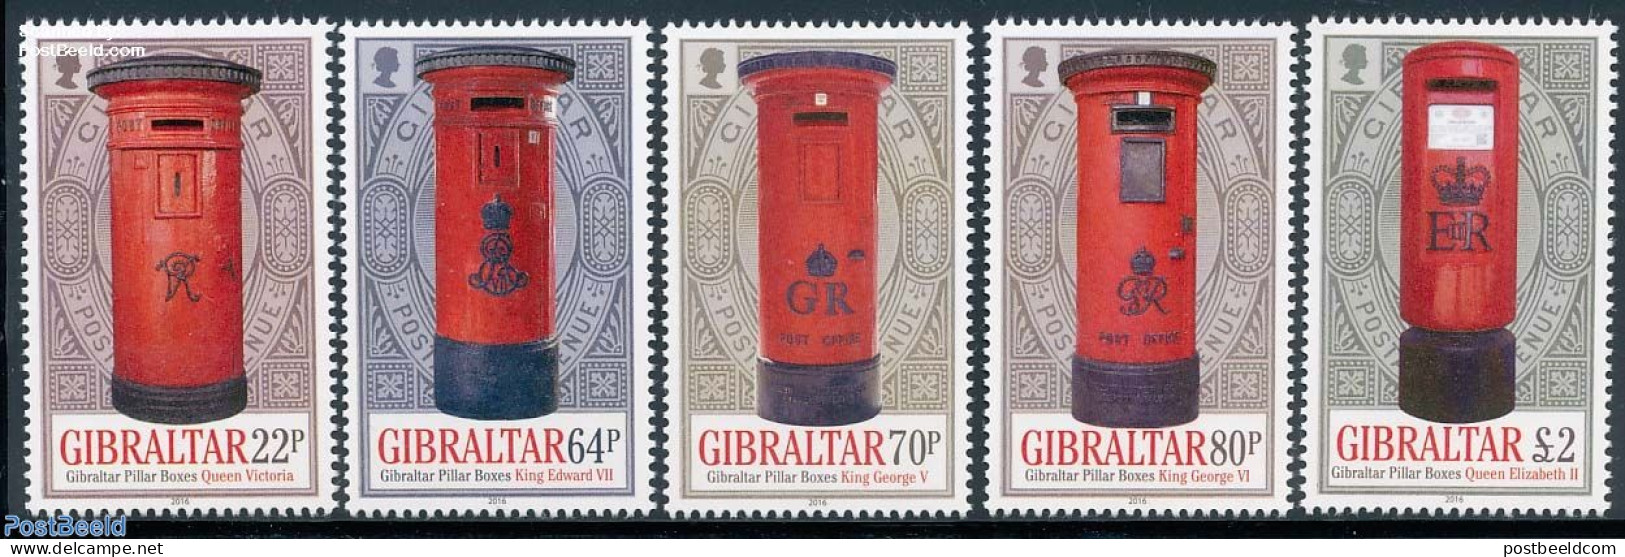 Gibraltar 2016 Gibraltar Pillar Boxes 5v, Mint NH, Mail Boxes - Post - Stamps On Stamps - Poste